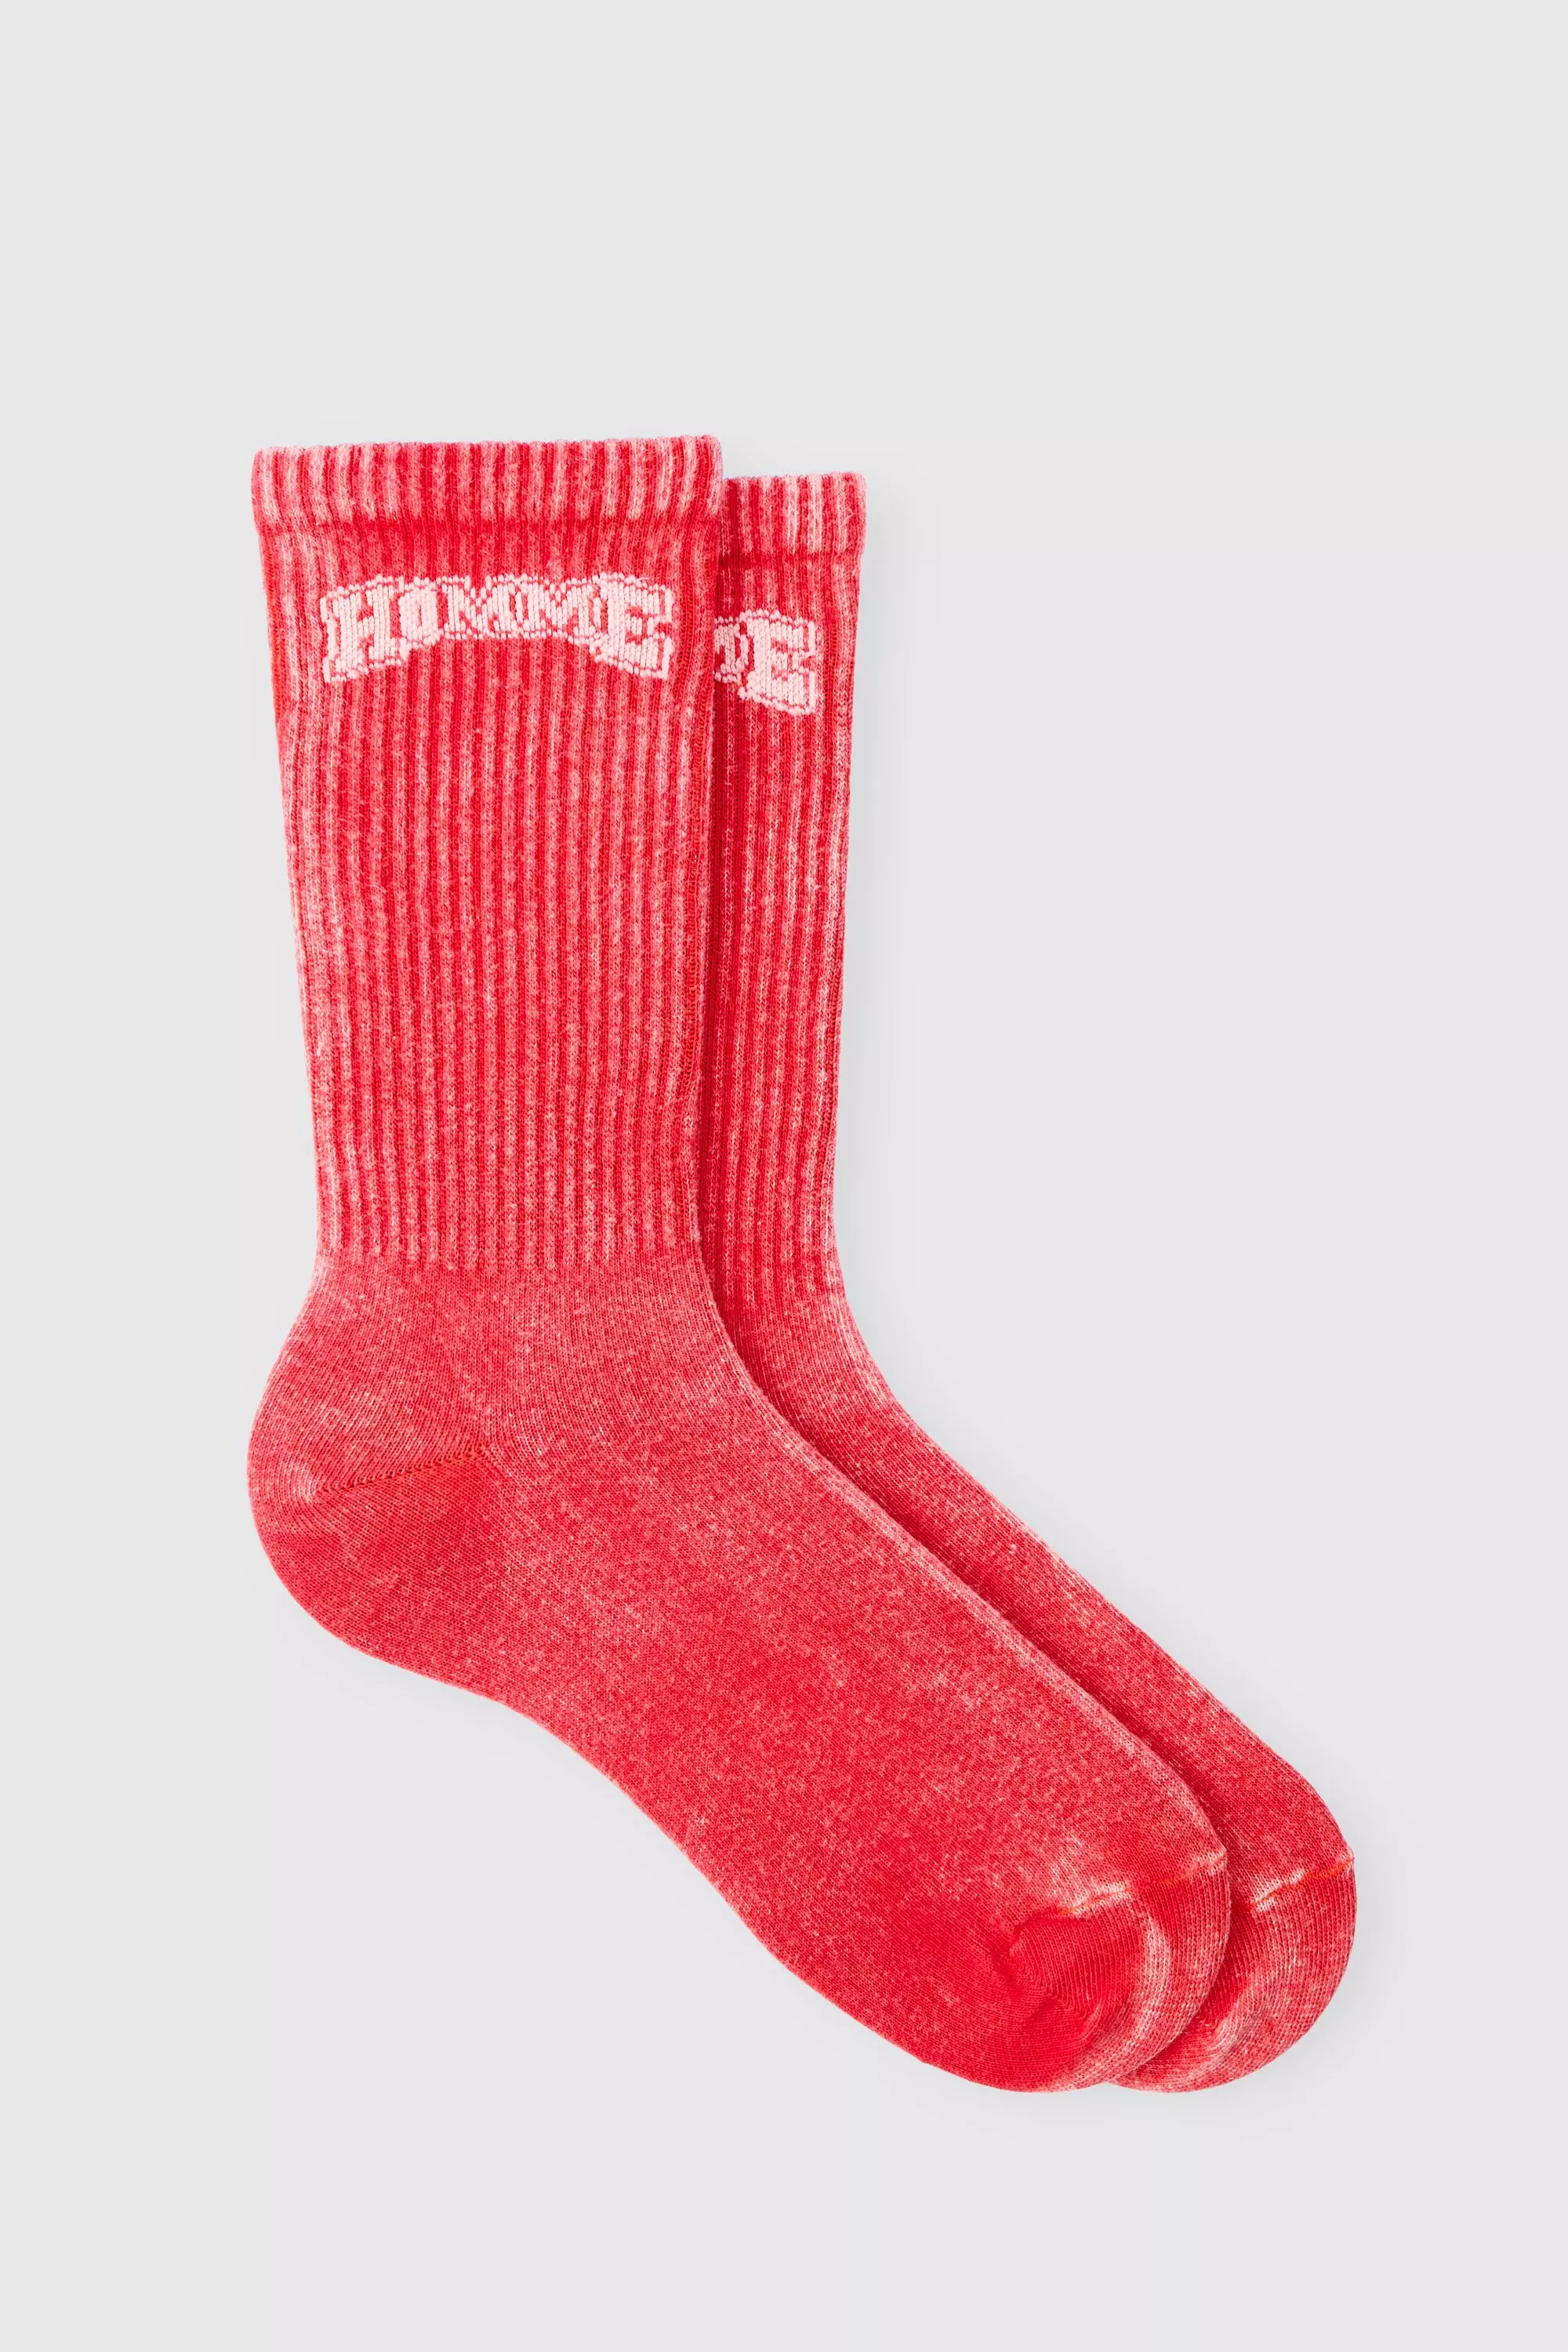 Acid Wash Homme Socks In Red Red